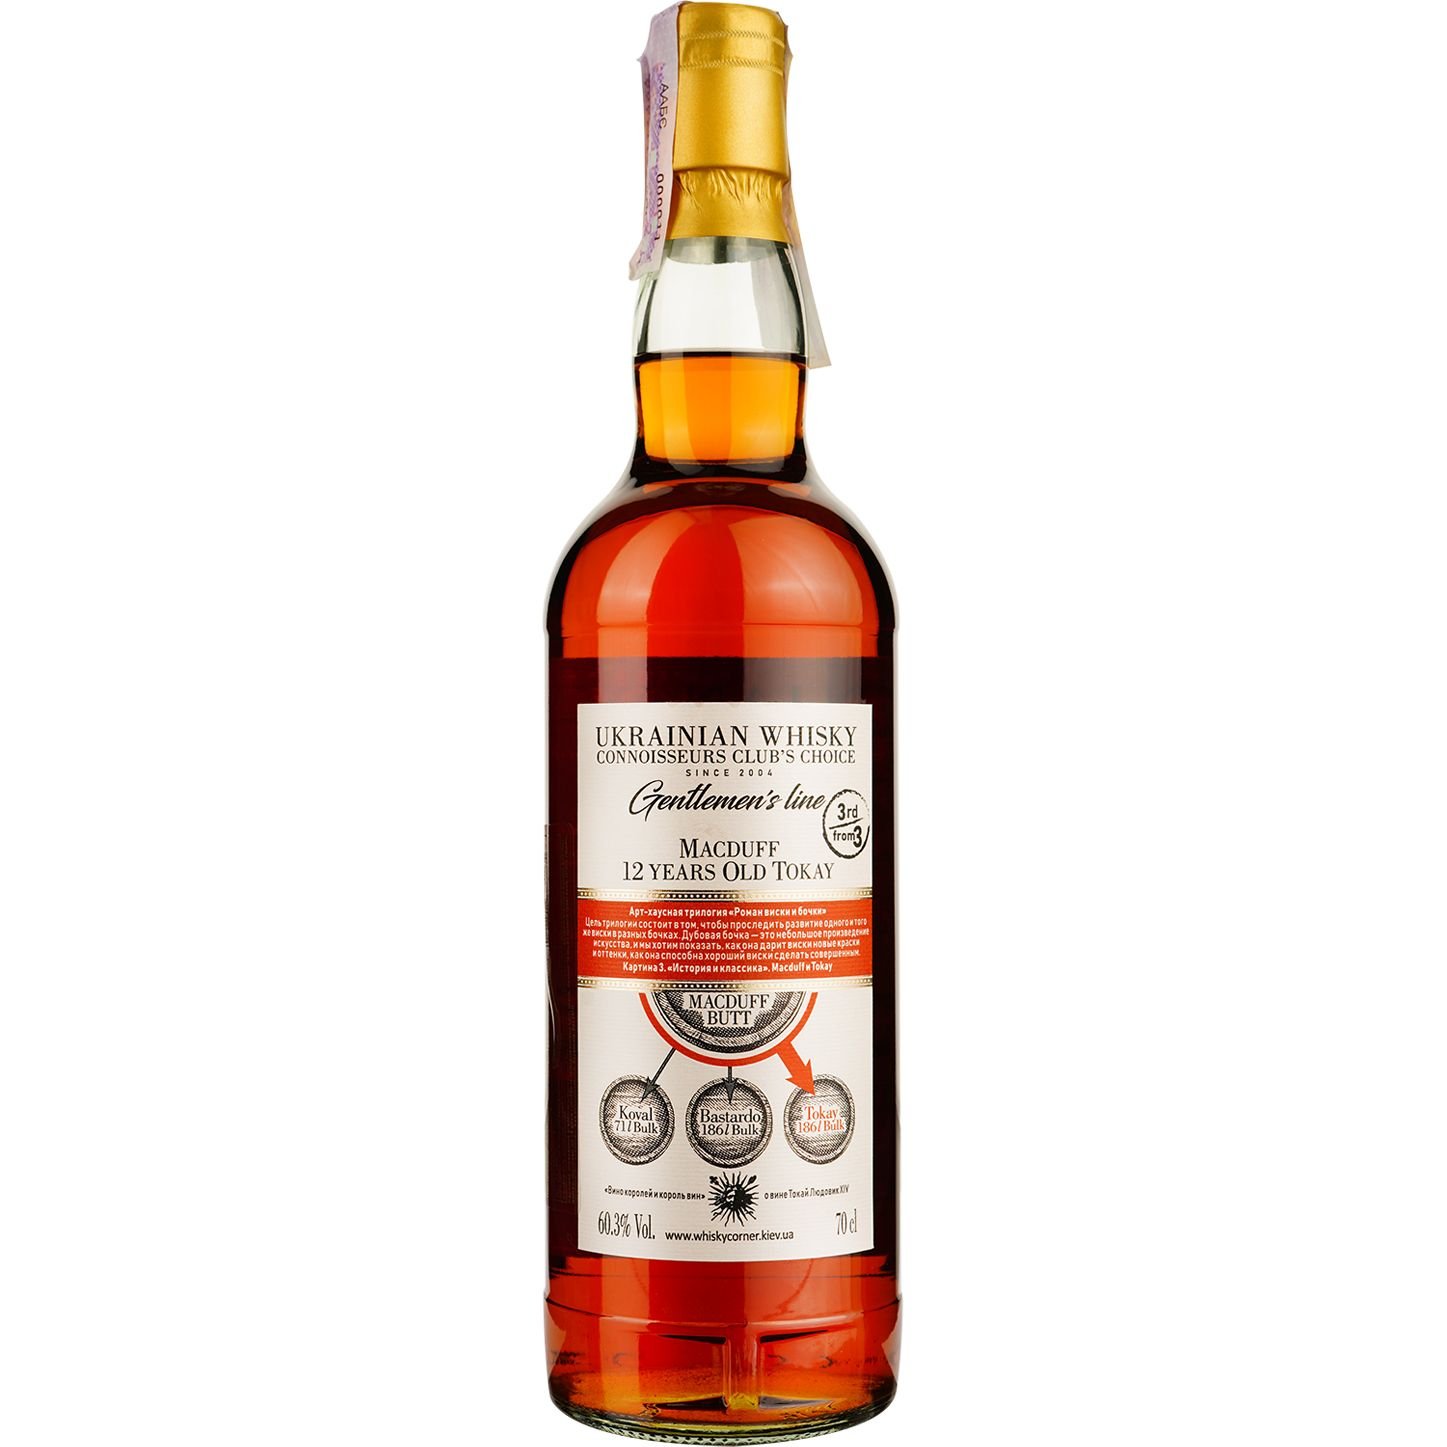 Виски Macduff 12 Years Old Tokay Single Malt Scotch Whisky, в подарочной упаковке, 60,3%, 0,7 л - фото 4